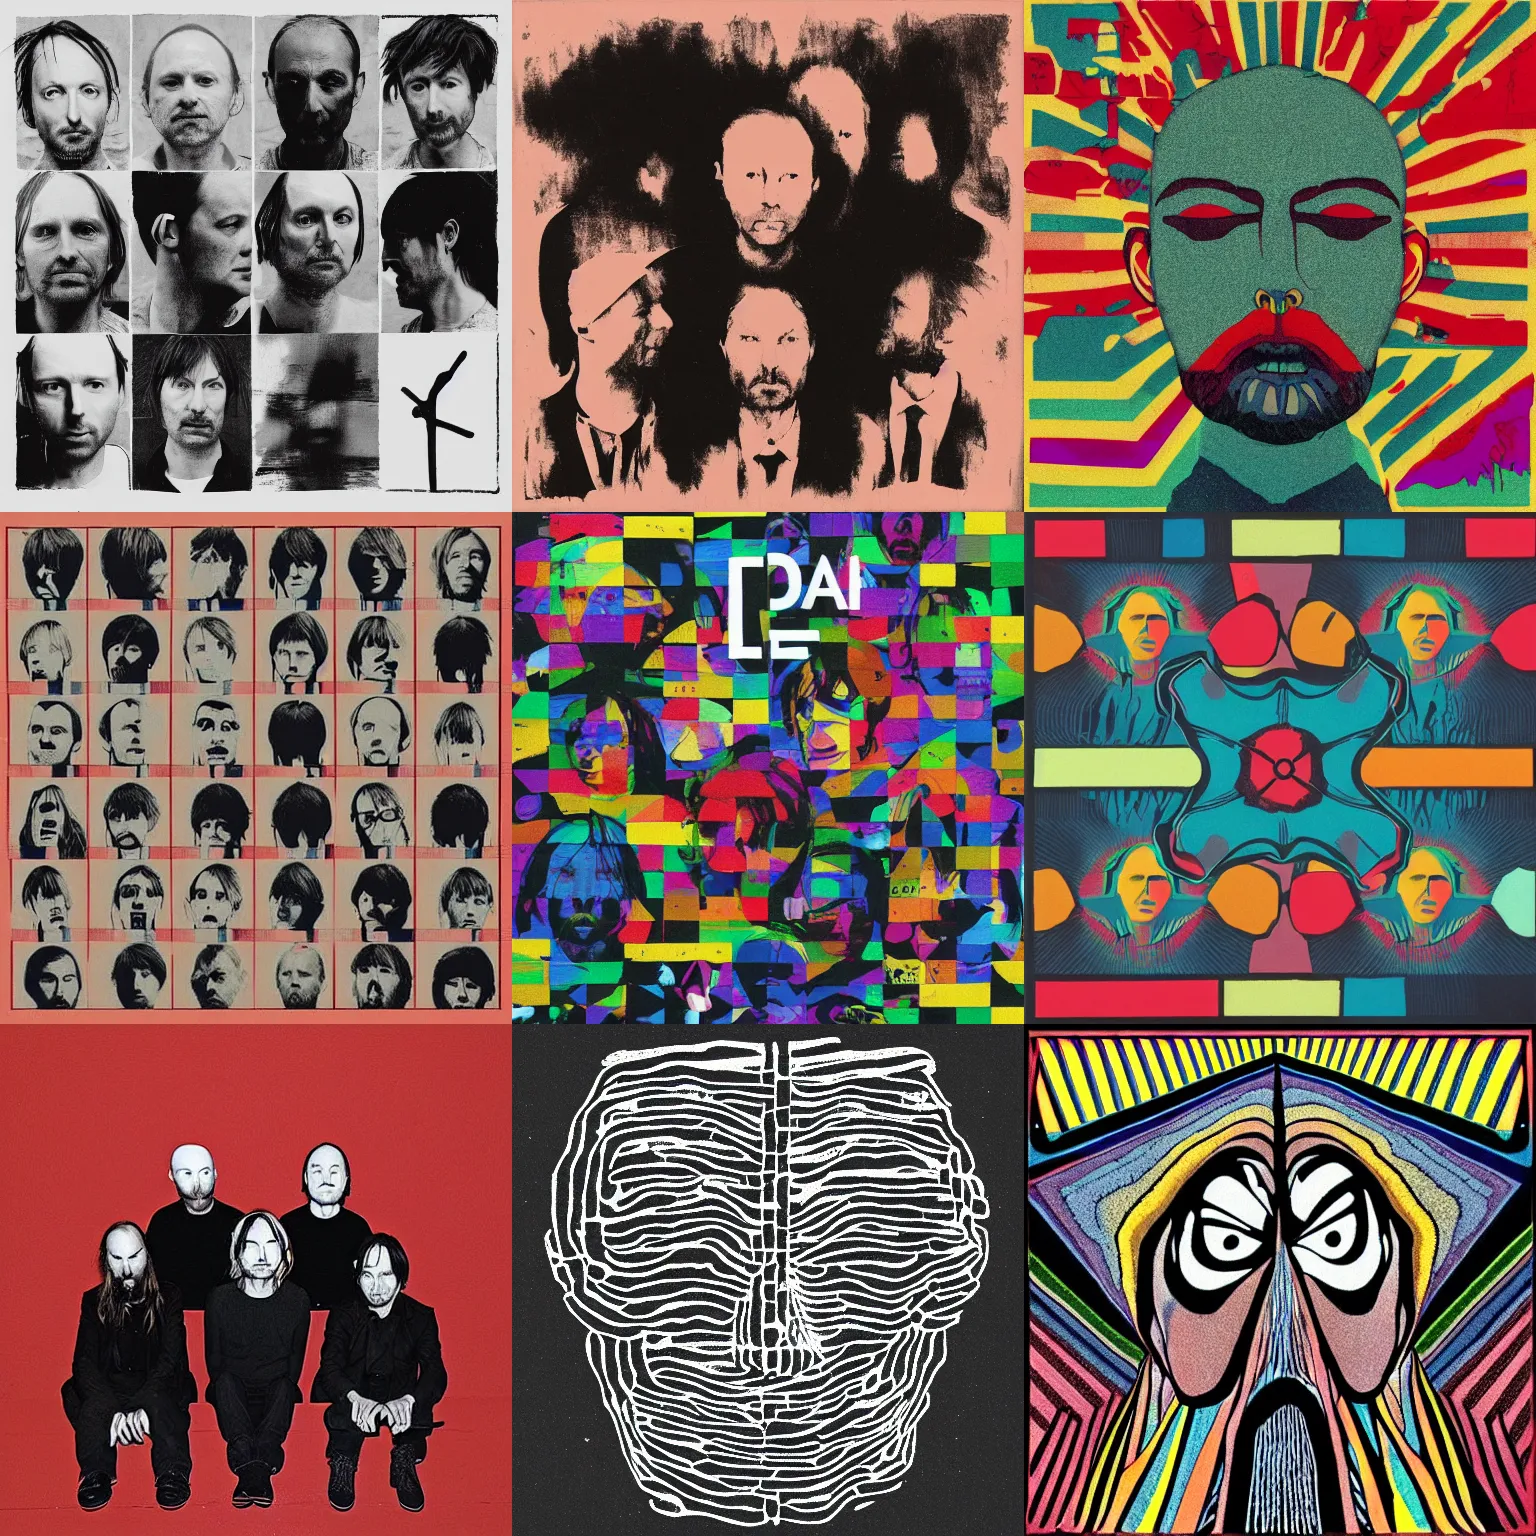 radiohead album covers